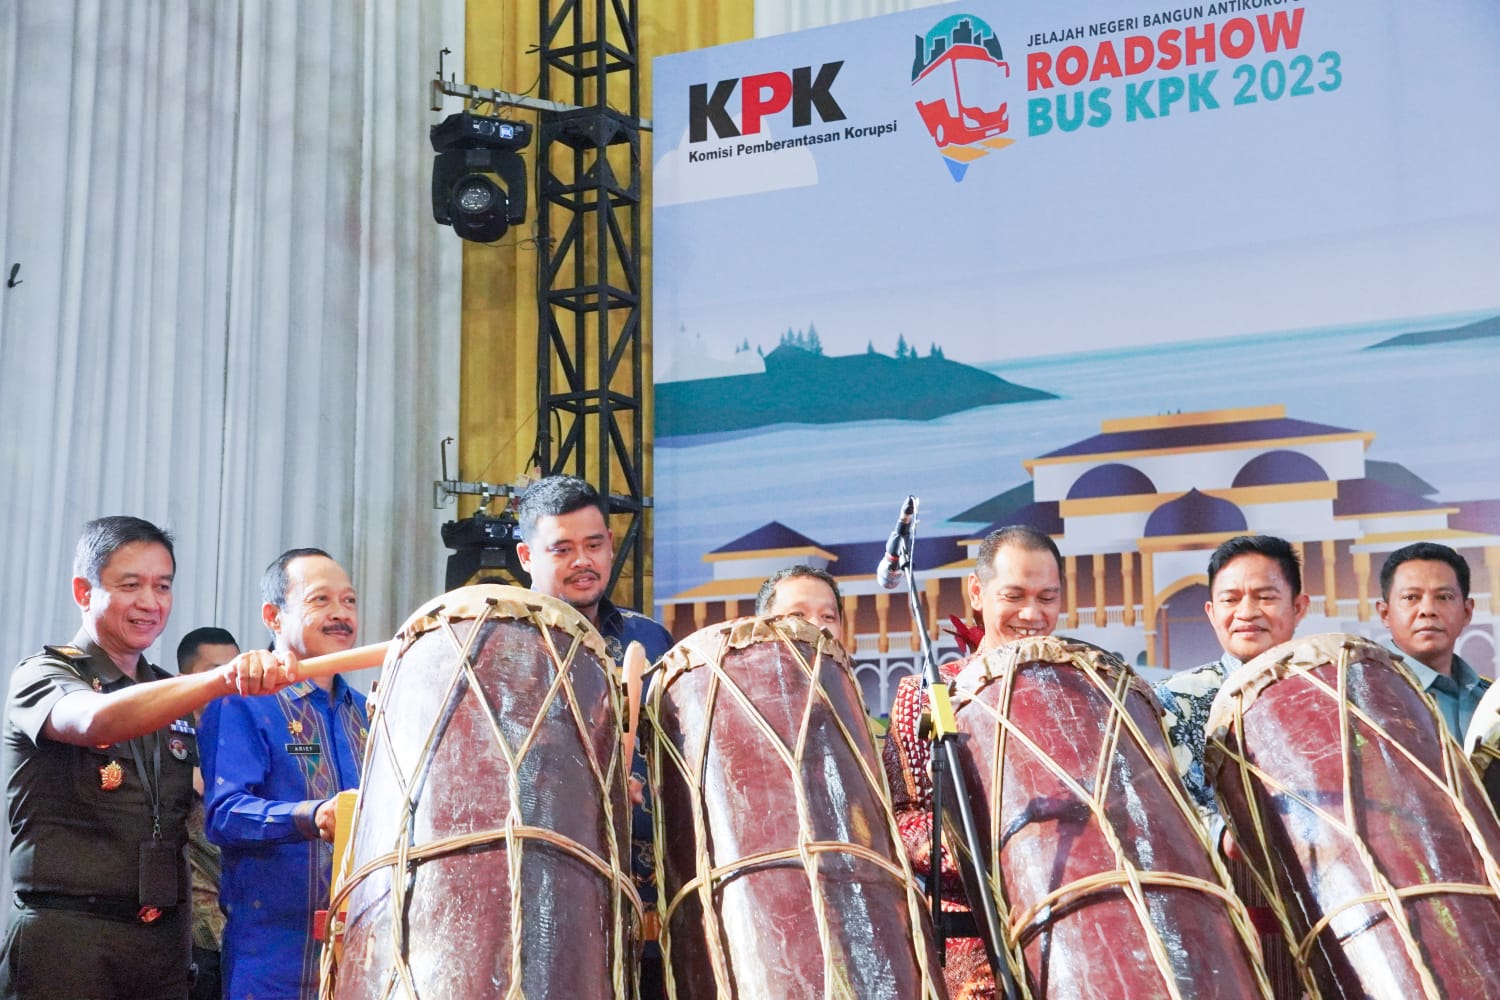 Bobby Nasution Dampingi Pimpinan KPK Buka Roadshow Bus KPK, Gelorakan Sumut Anti Korupsi